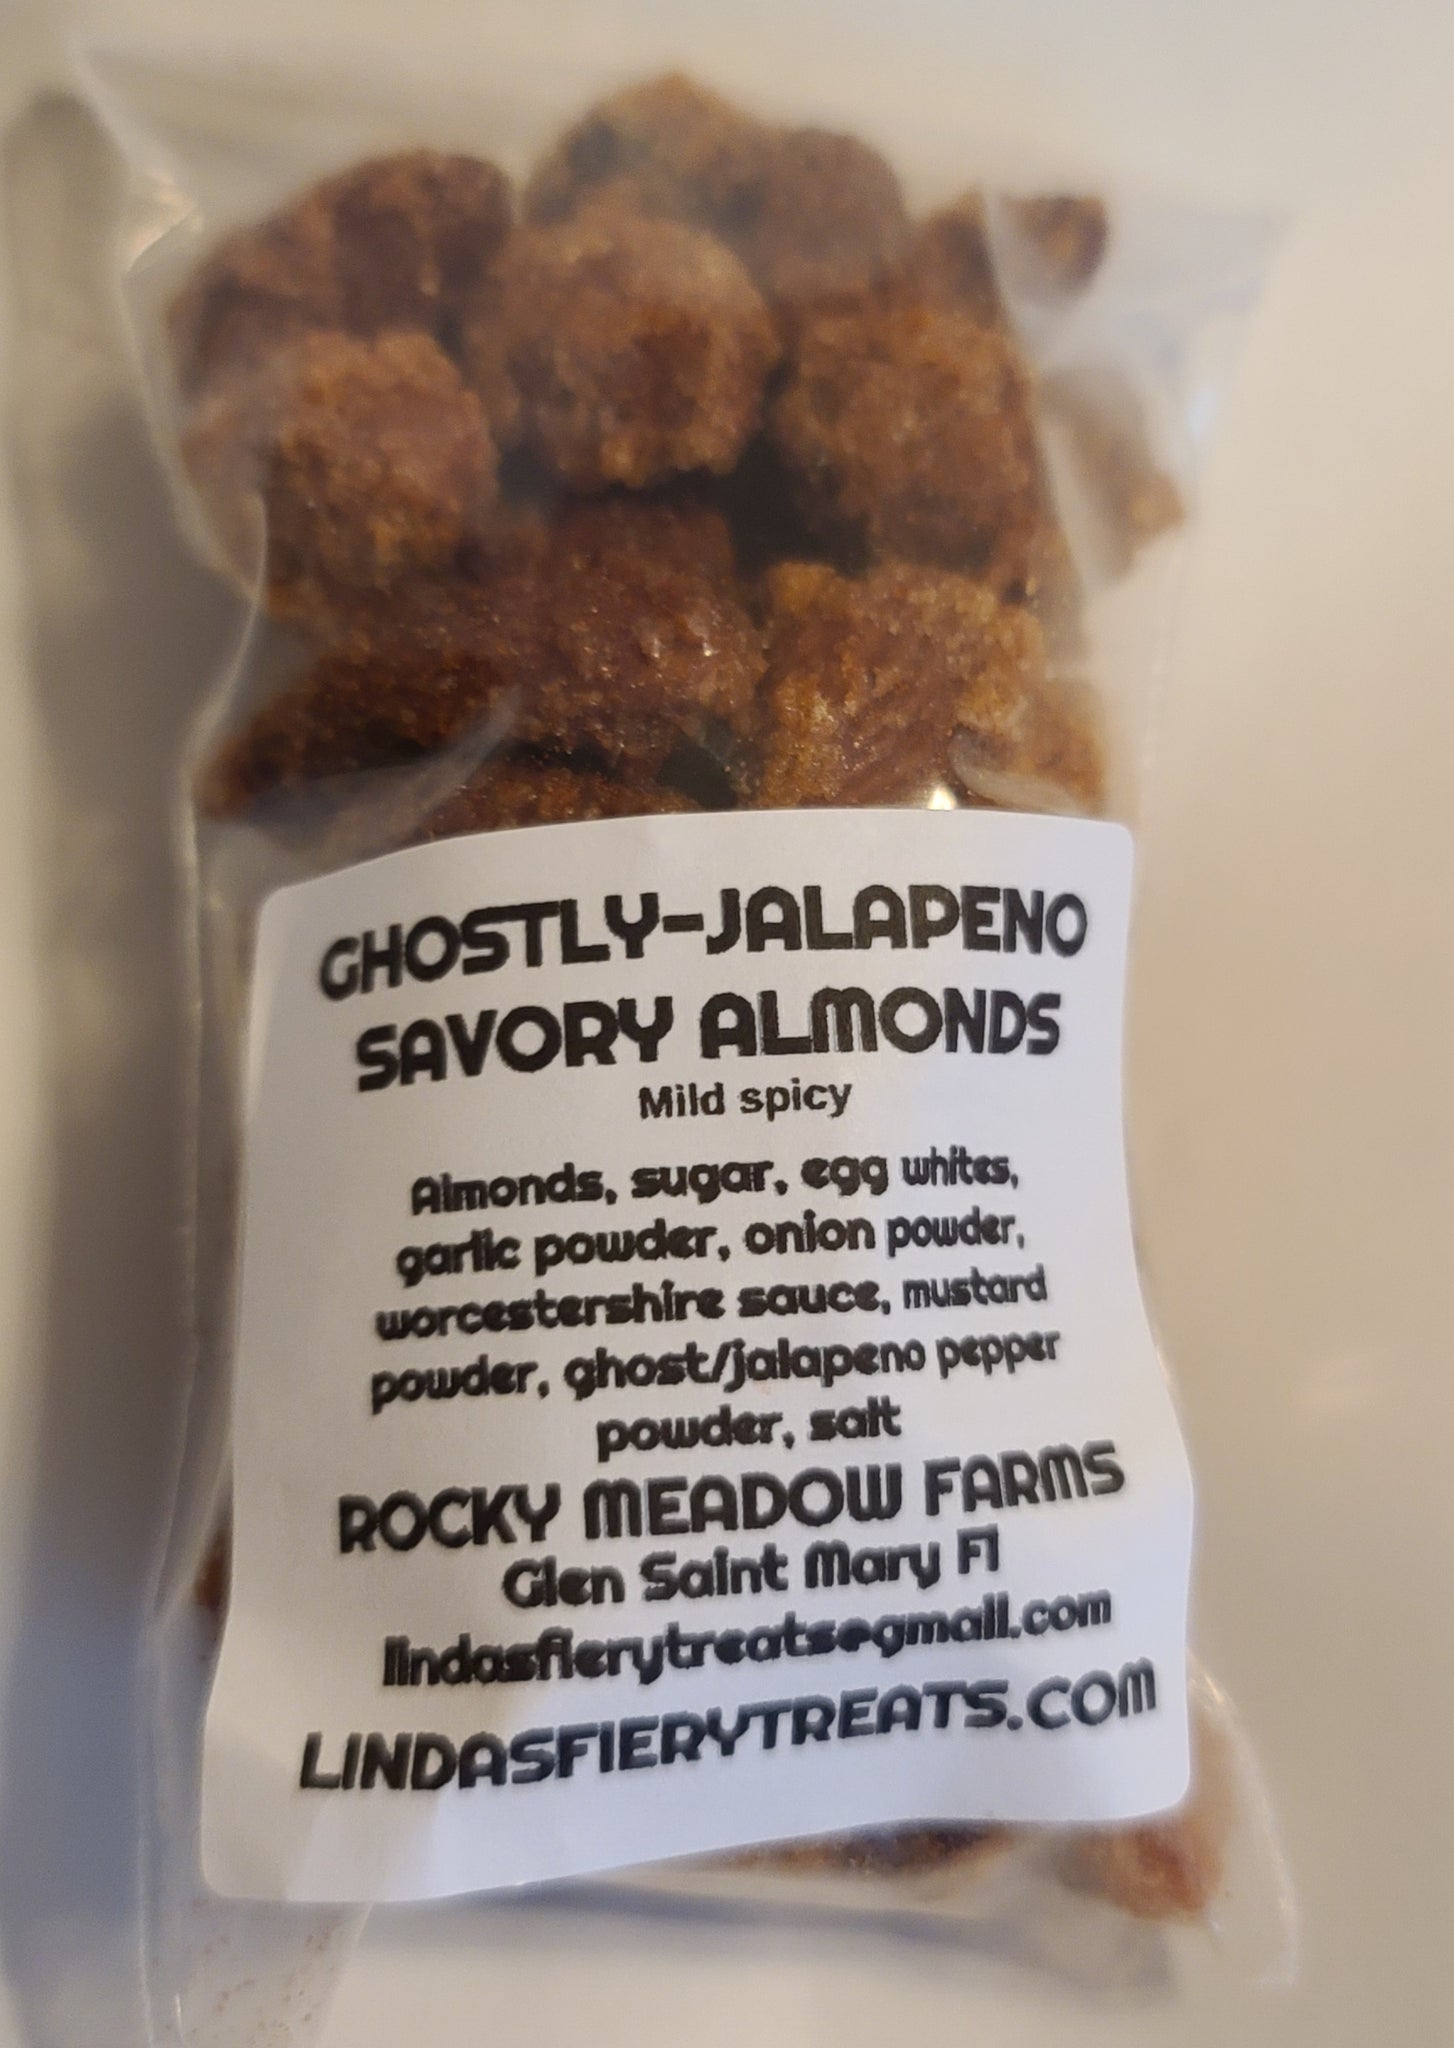 Ghostly Jalapeno Savory Almonds - Mild Spicy - Ingredients: Almonds, Sugar, Egg Whites, Garlic Powder, Onion Powder, Worcestershire Sauce, Mustard Powder, Ghost/Jalapeno Pepper Powder, Salt